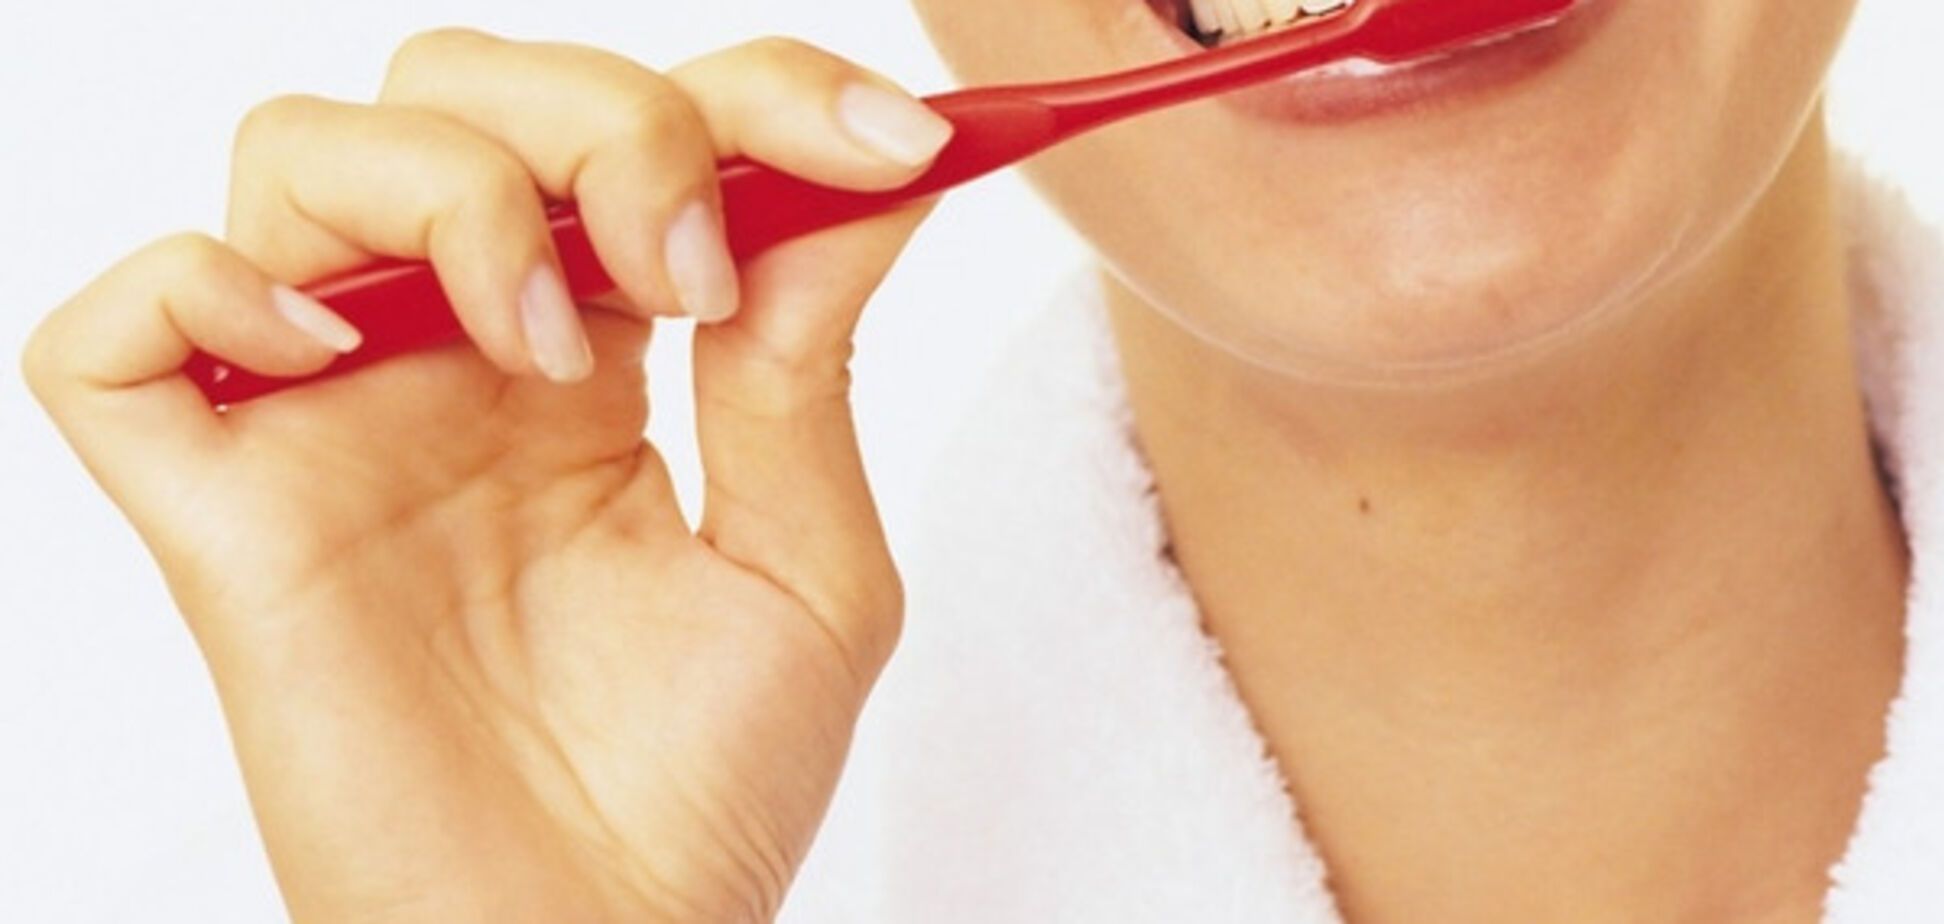 Як правильно чистити зуби: два важливих правила